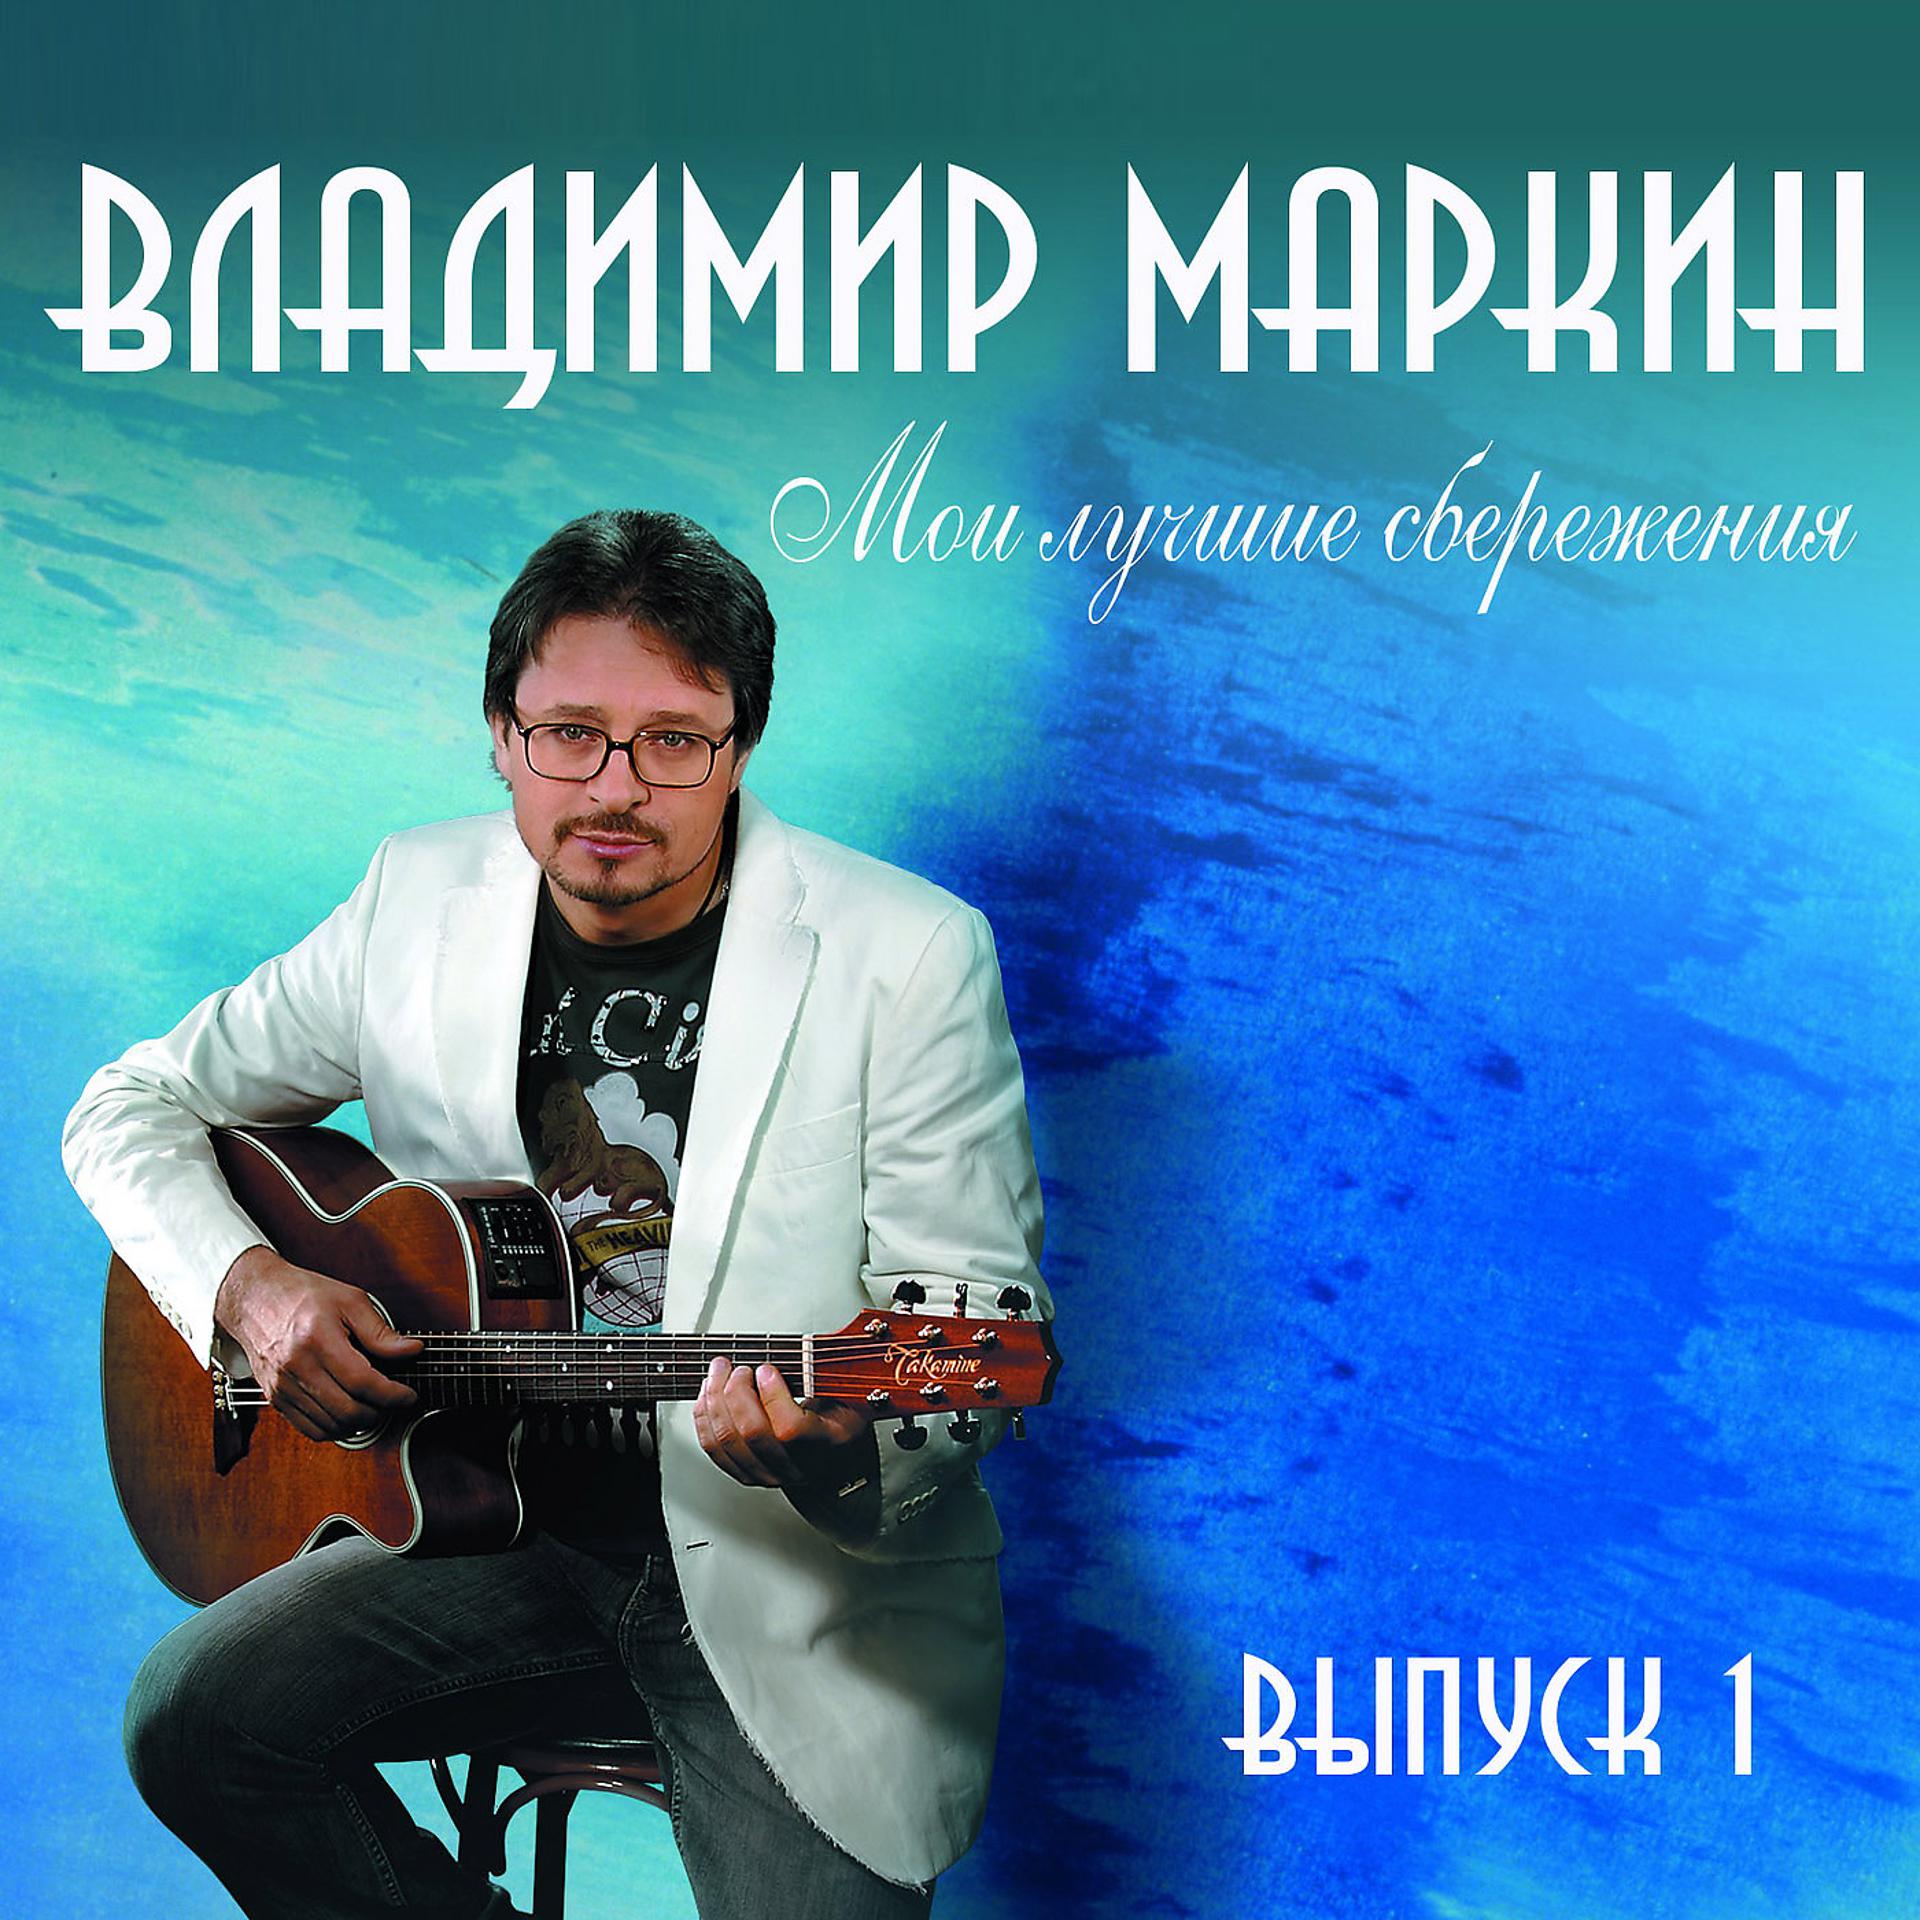 Постер к треку Владимир Маркин - Сиреневый туман